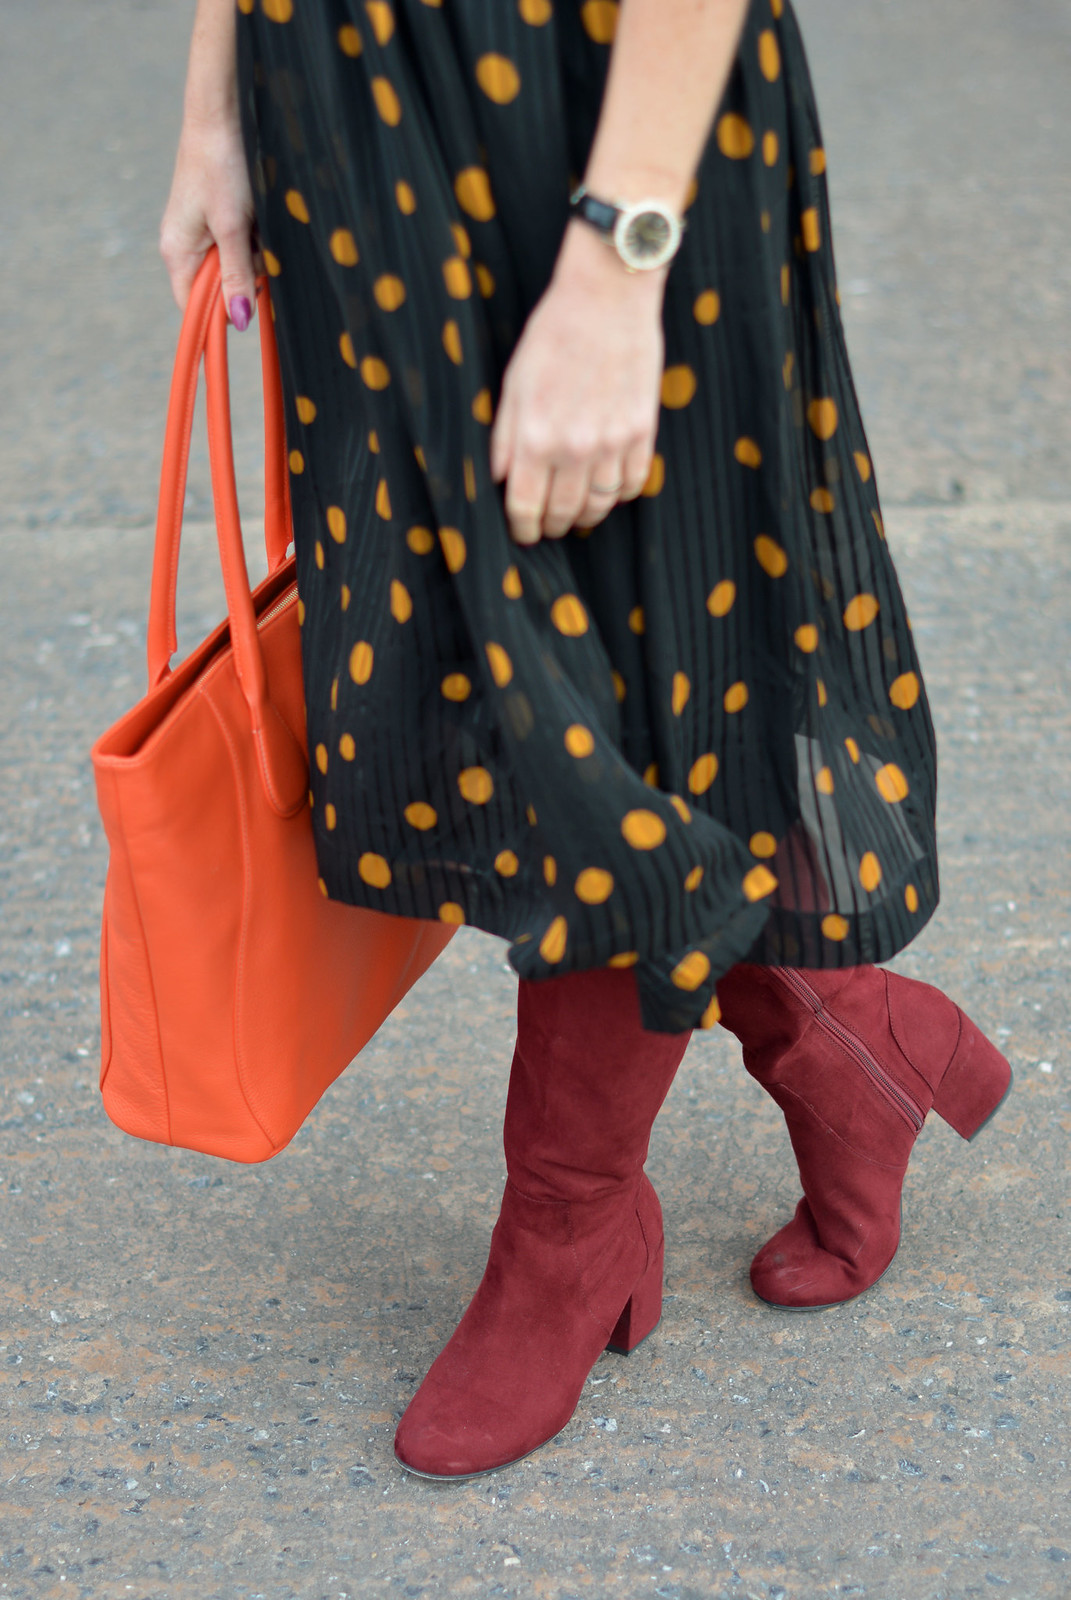 Vintage 70s polka dots dress, burgundy boots, orange tote | Not Dressed As Lamb